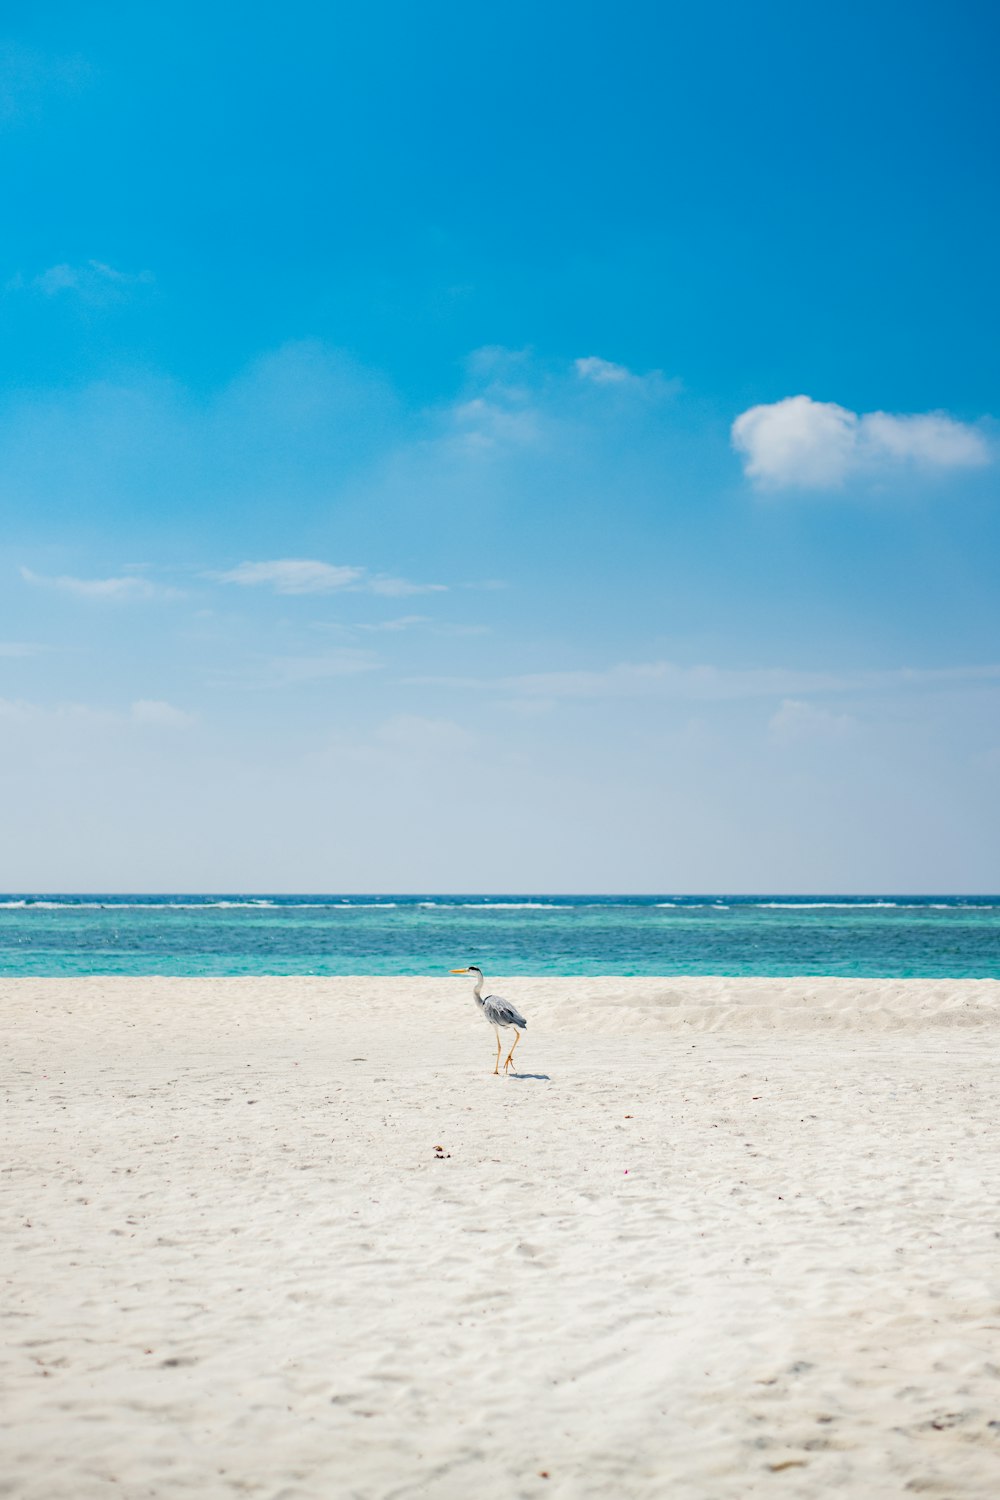 a seagull standing on a sandy beach near the ocean